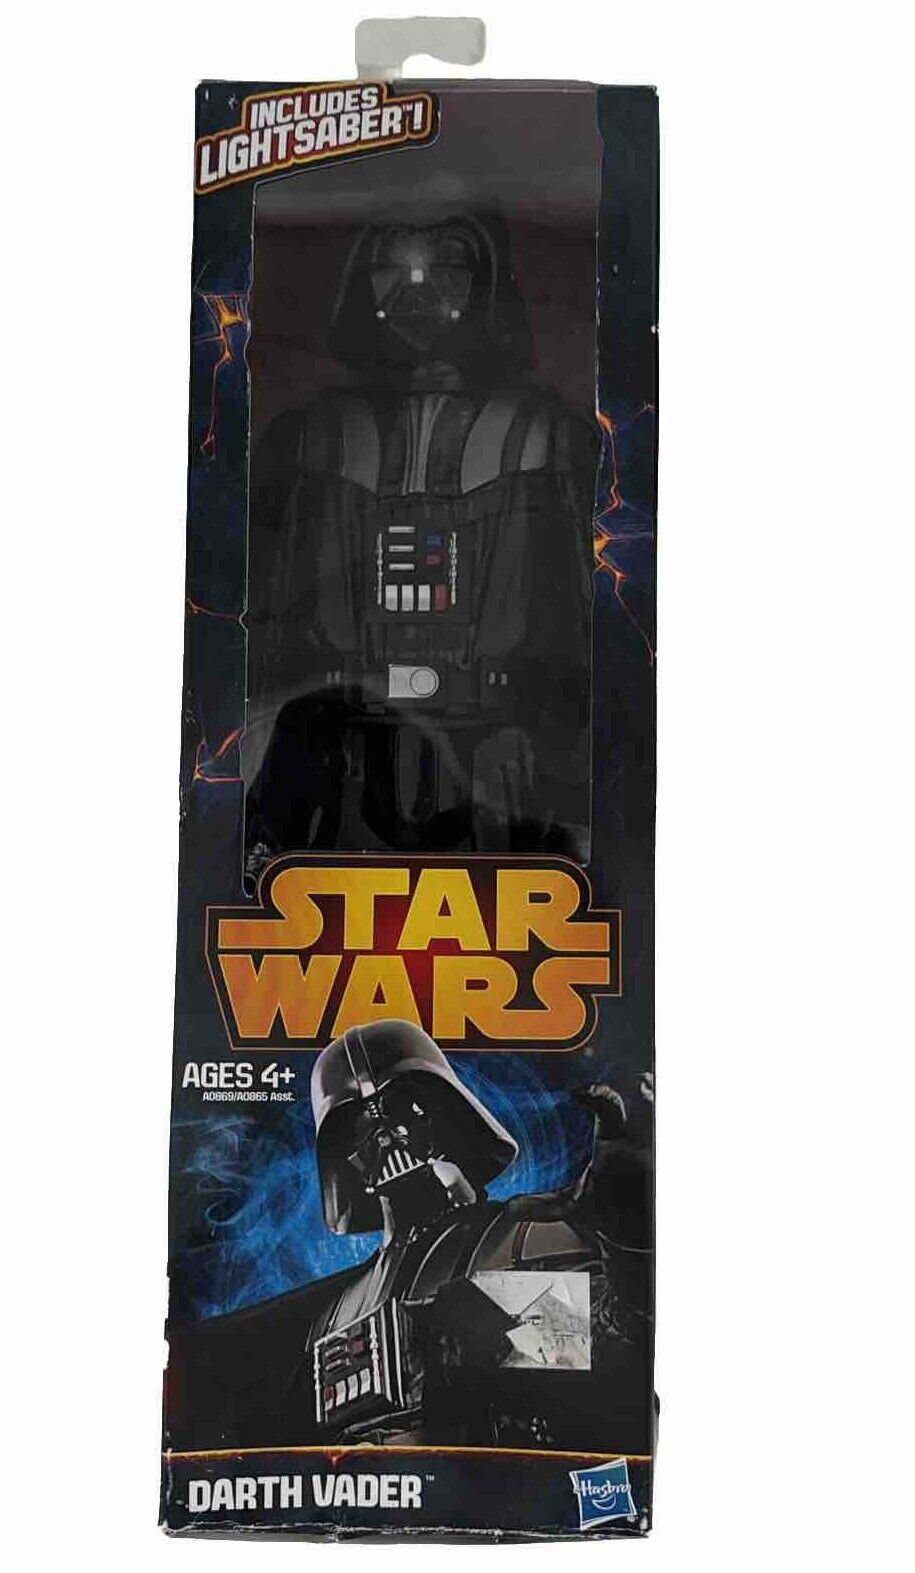 New In Box Darth Vader Star Wars 12 Inch Figure w/ Light Saber - Plastic NIB Без бренда